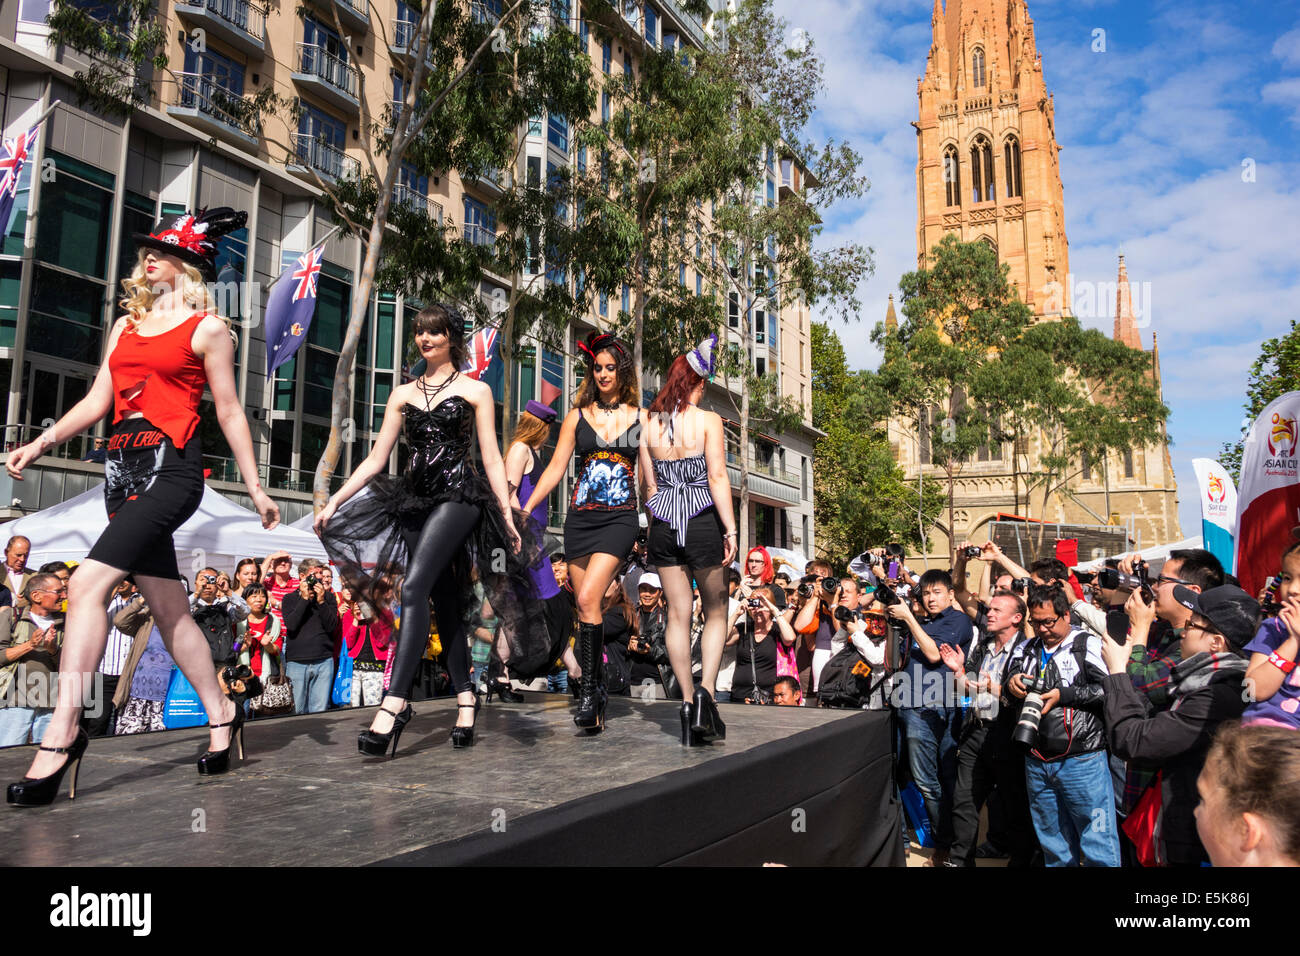 Melbourne Australia,Swanston Street,Plaza de la ciudad,festival,Lord Mayor's Student Welcome,desfile de moda,pista,mujer mujer mujer mujer,modelo,posando,pos Foto de stock